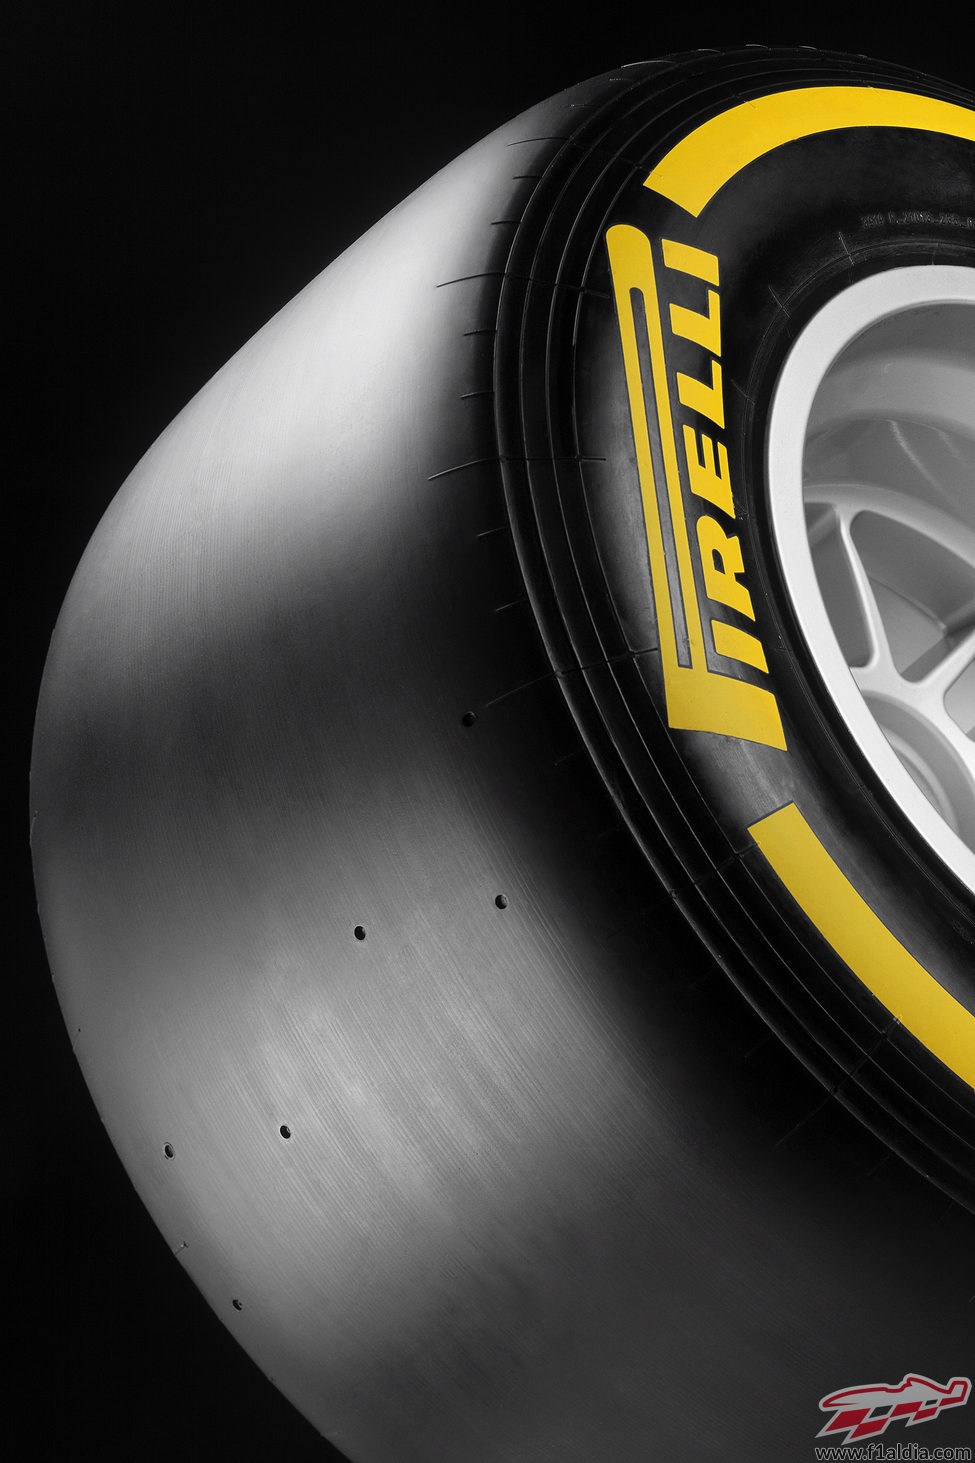 Perfil del neumático Pirelli blando para 2013